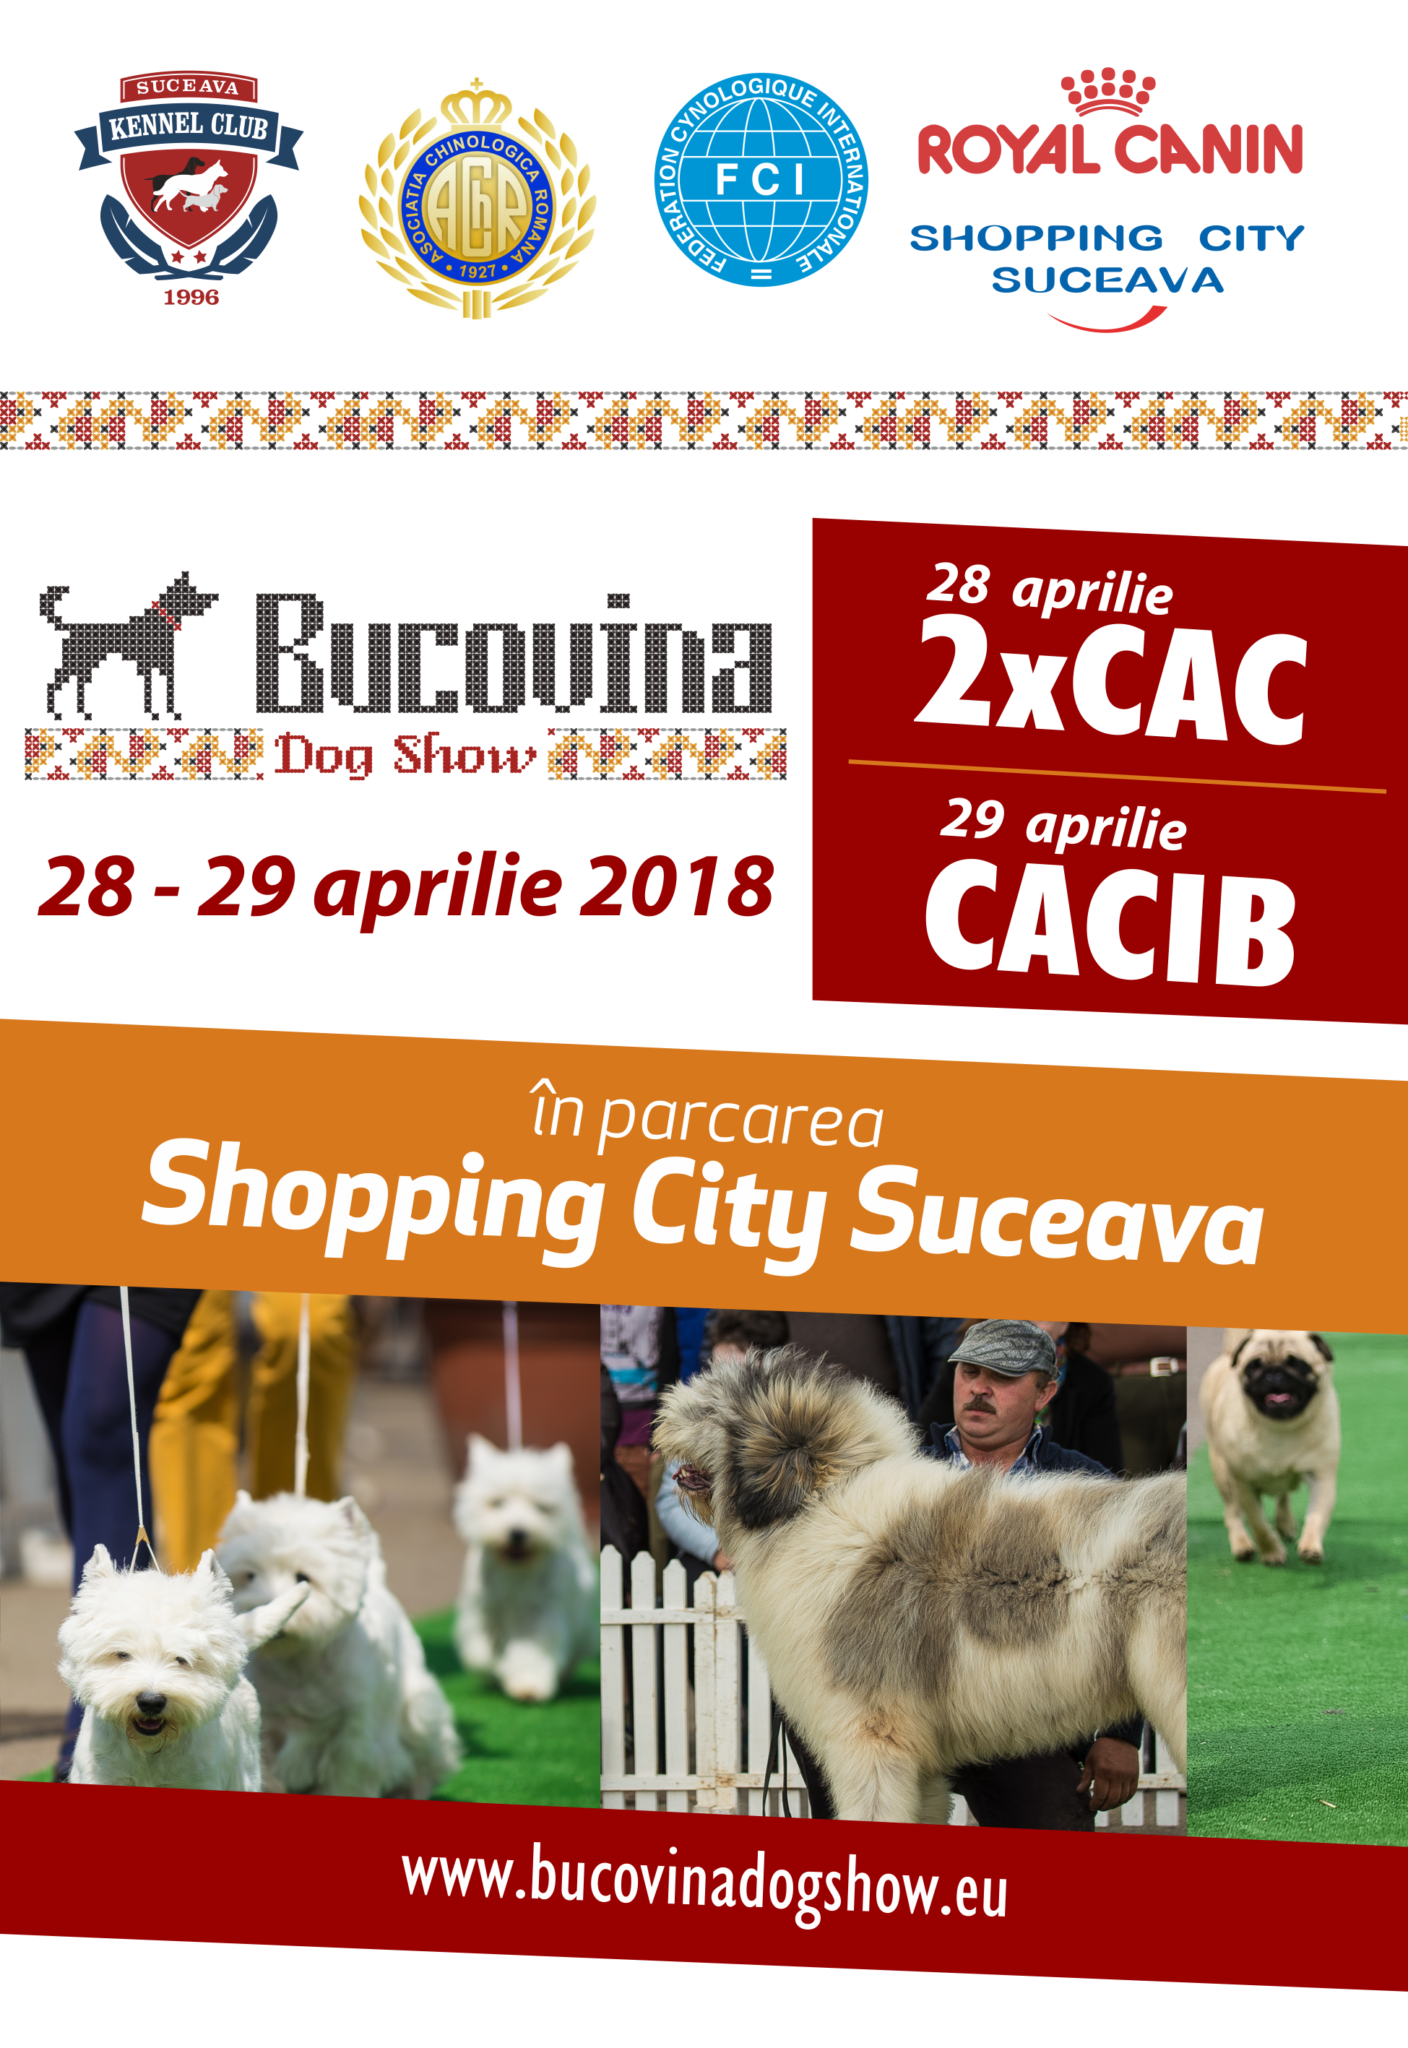 Bucovina Dog Show, în parcarea Shopping City Suceava